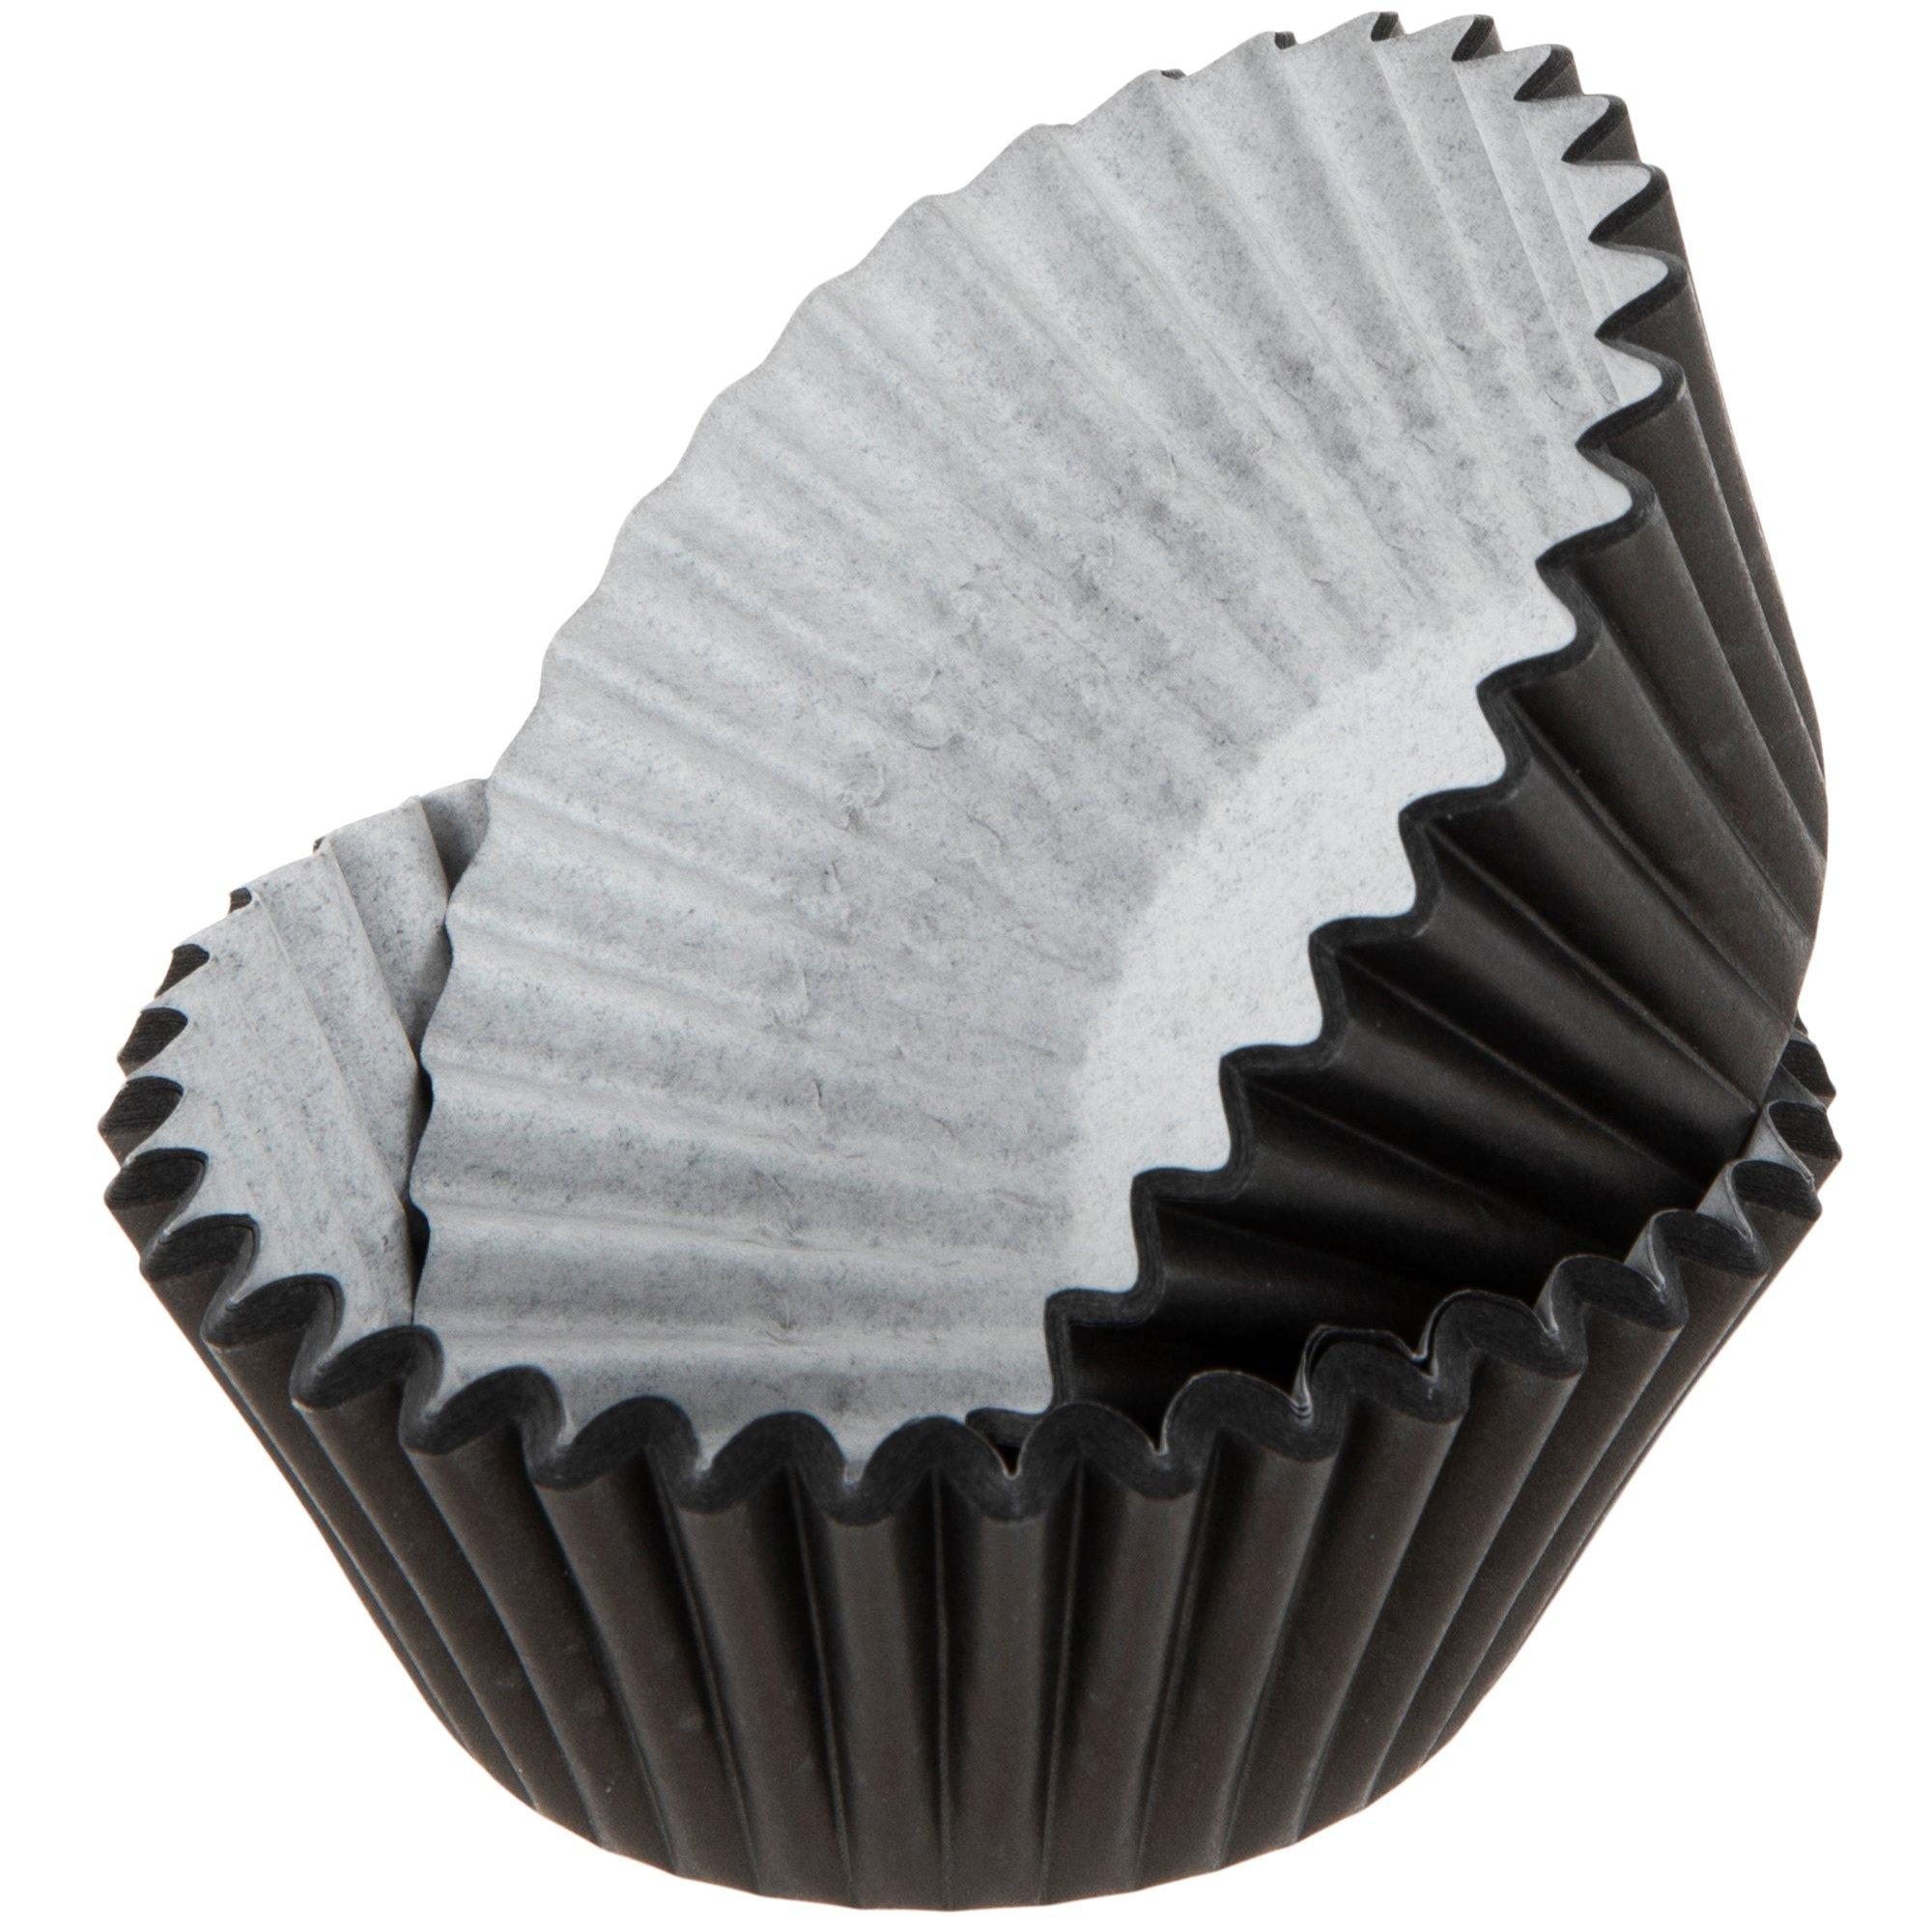 120 Black Foil Metallic Cupcake Liners Standard Baking Cups 120 Pieces